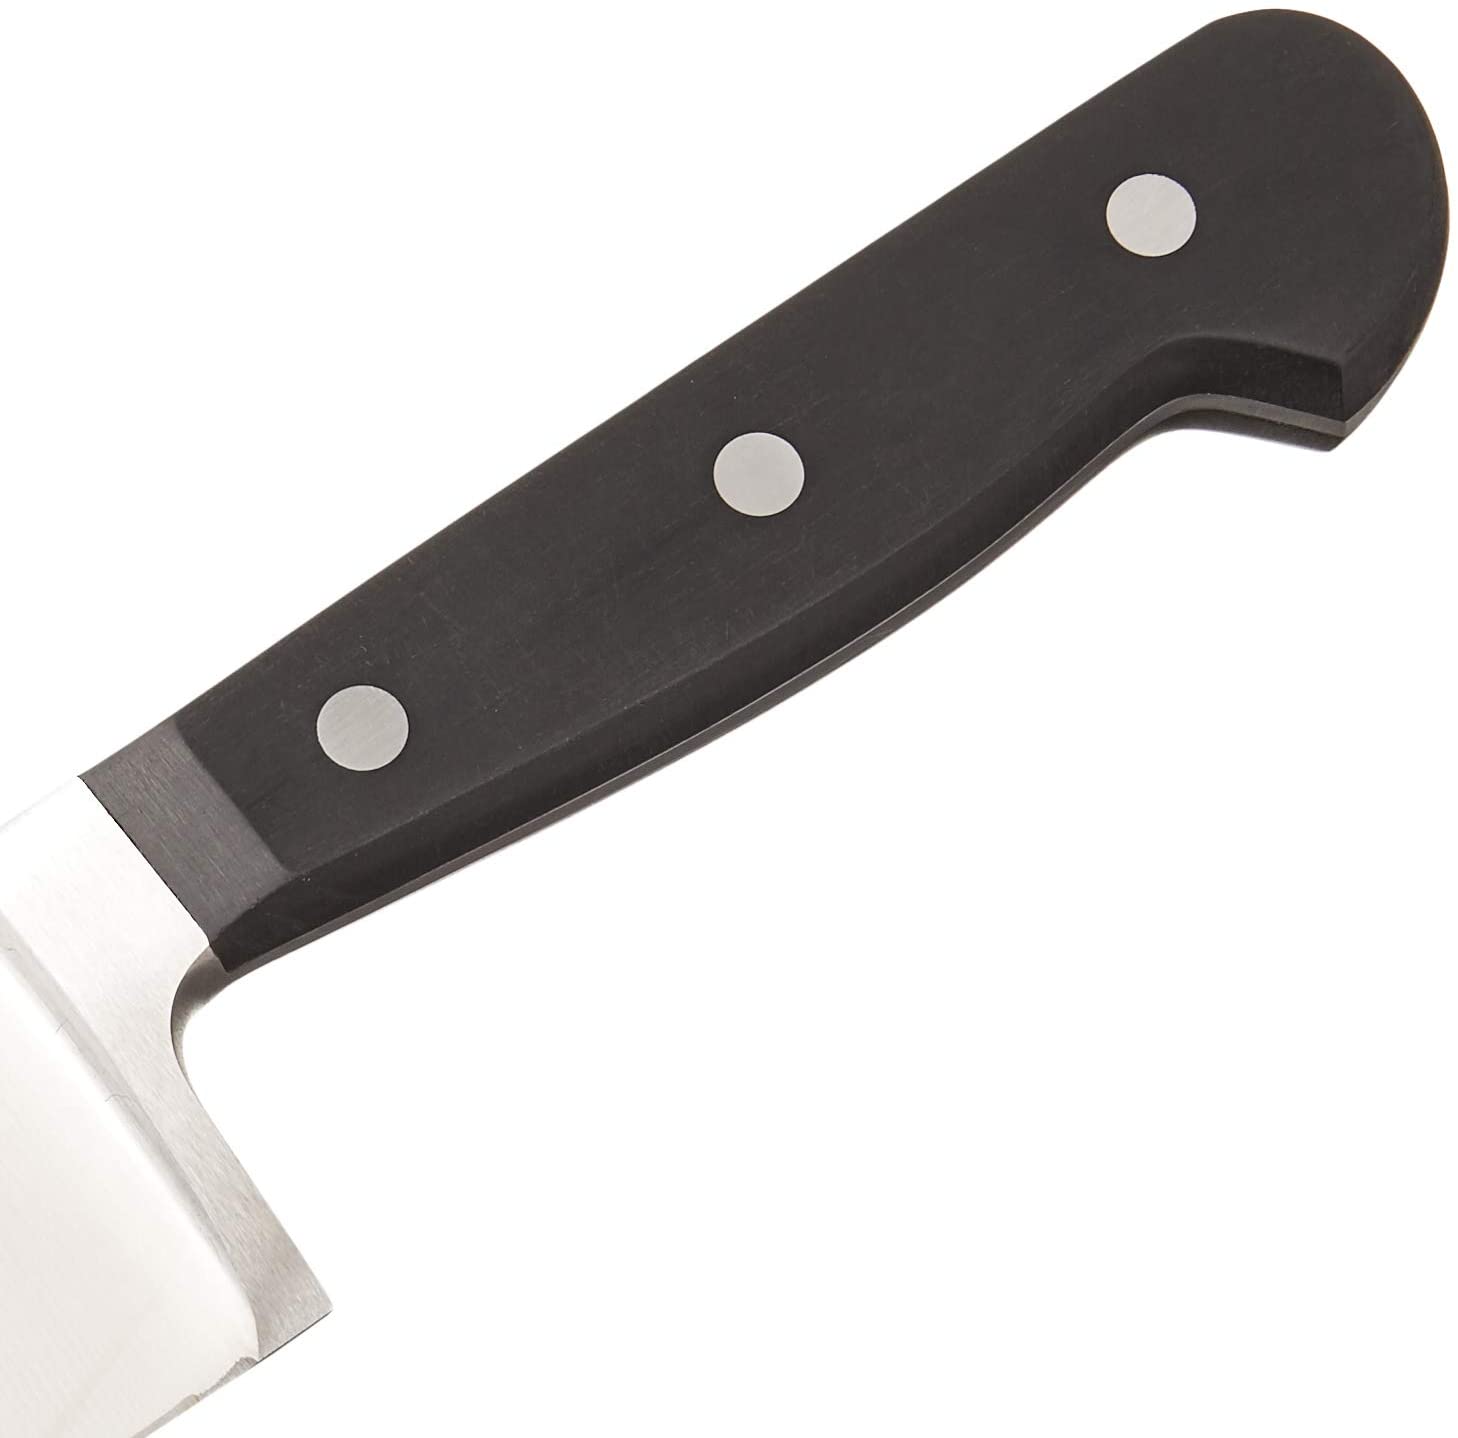 J.A. Henckels International Classic Chef Knife - 8 Inch